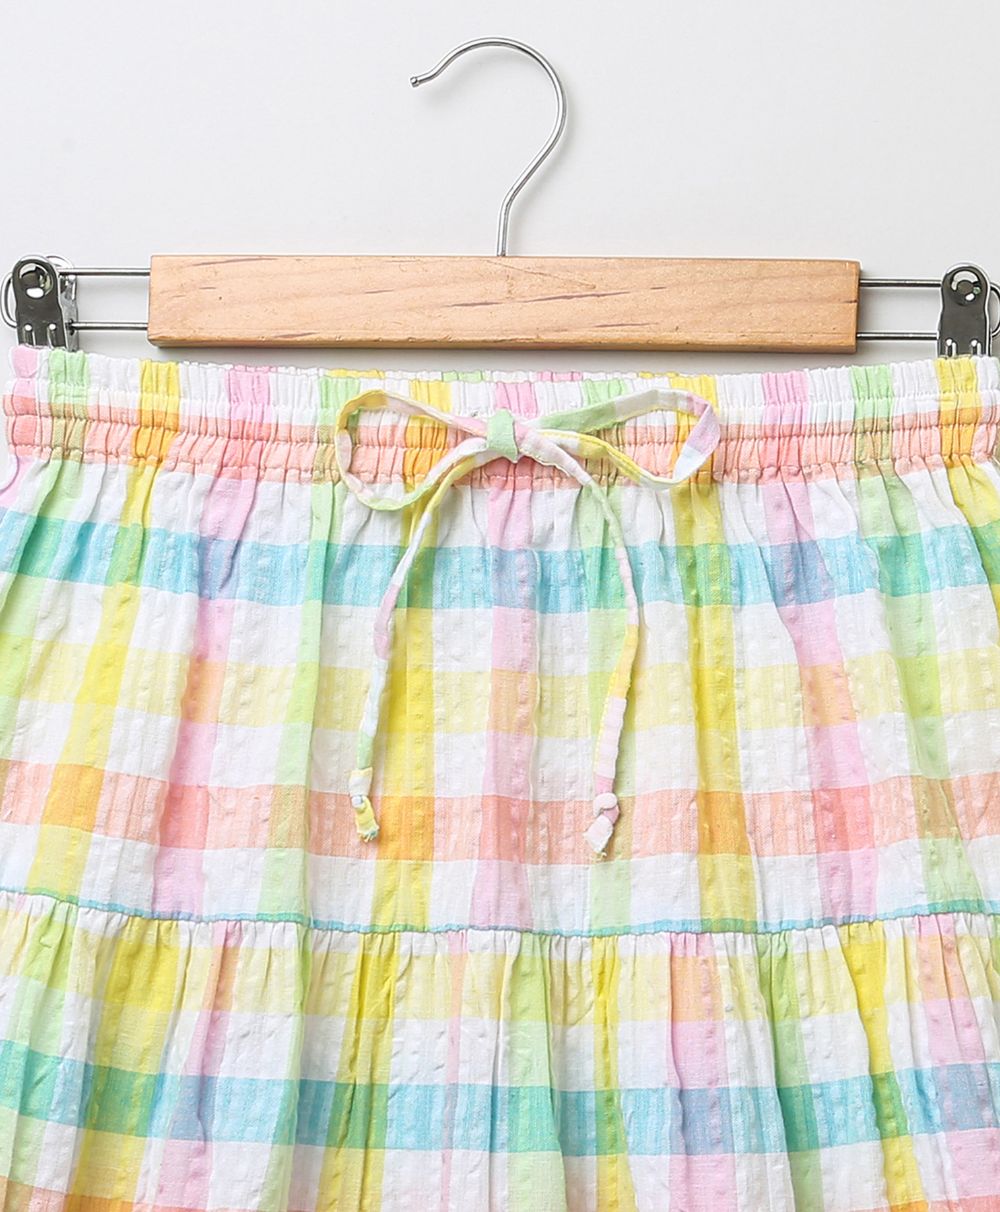 Sleeveless Smocked Checks Top & a Neon Multicoloured Checks Skirt